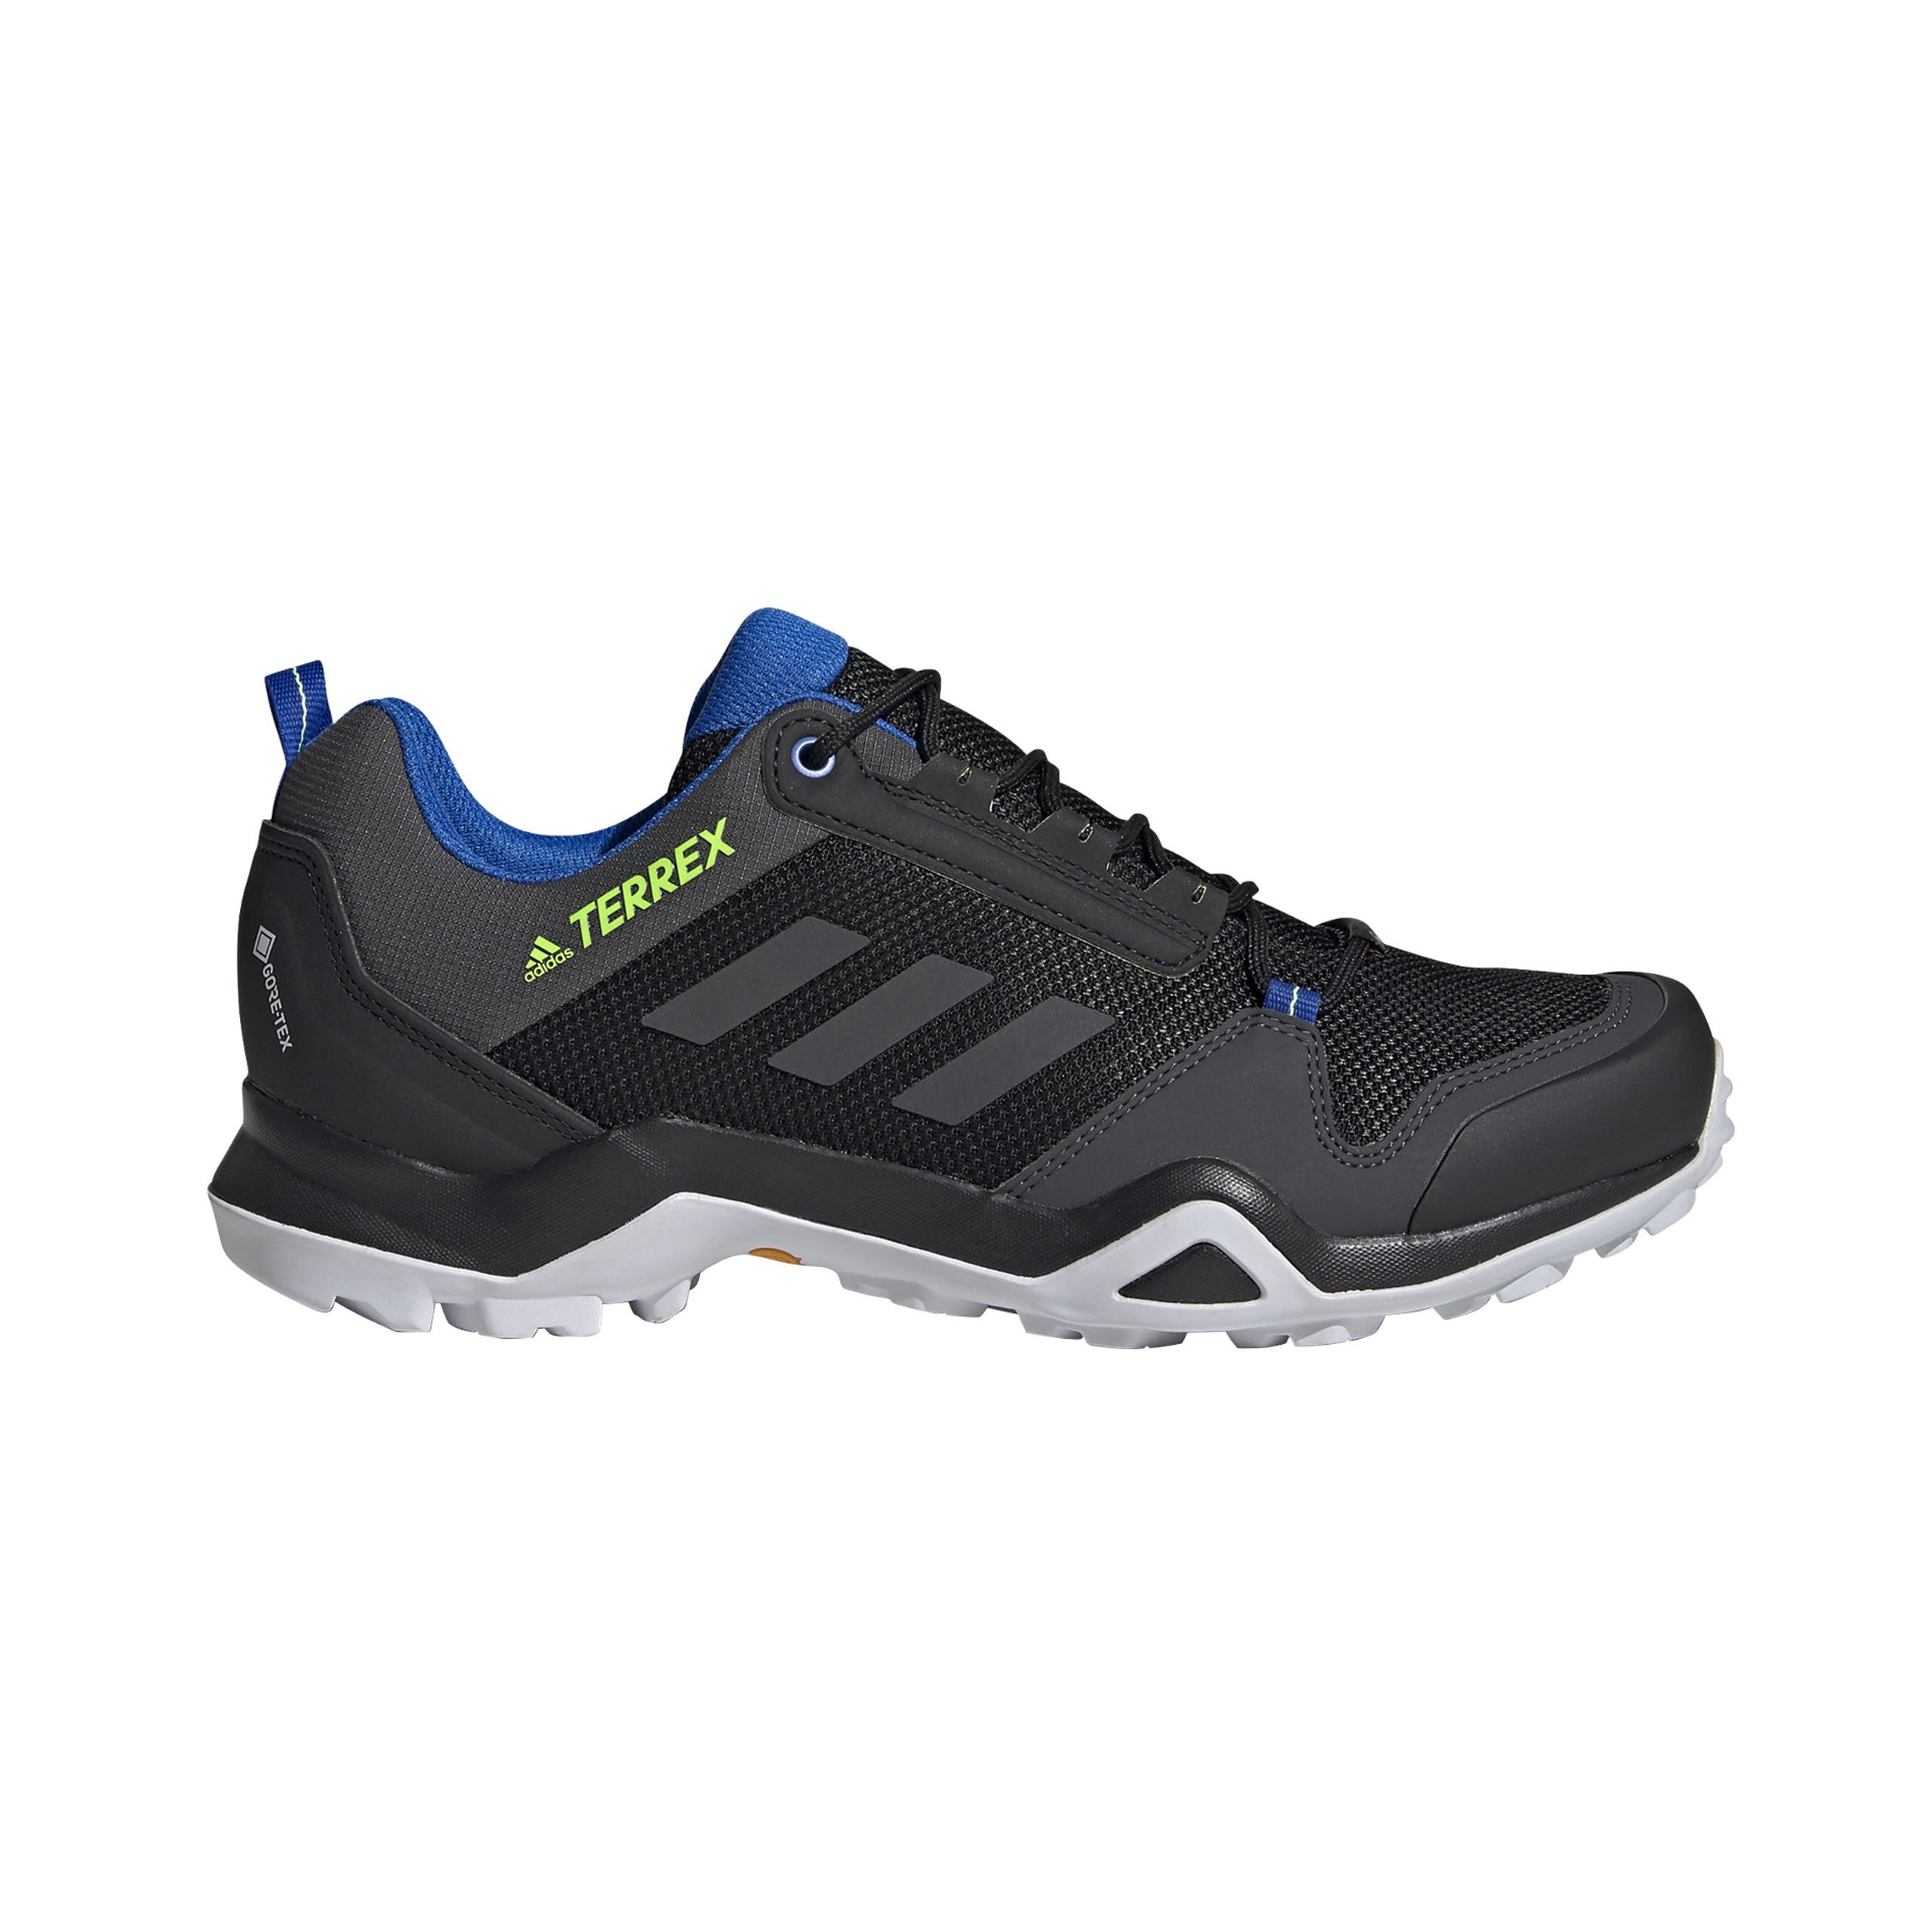 Adidas Mens Terrex Ax3 Gore-tex Hiking Shoes